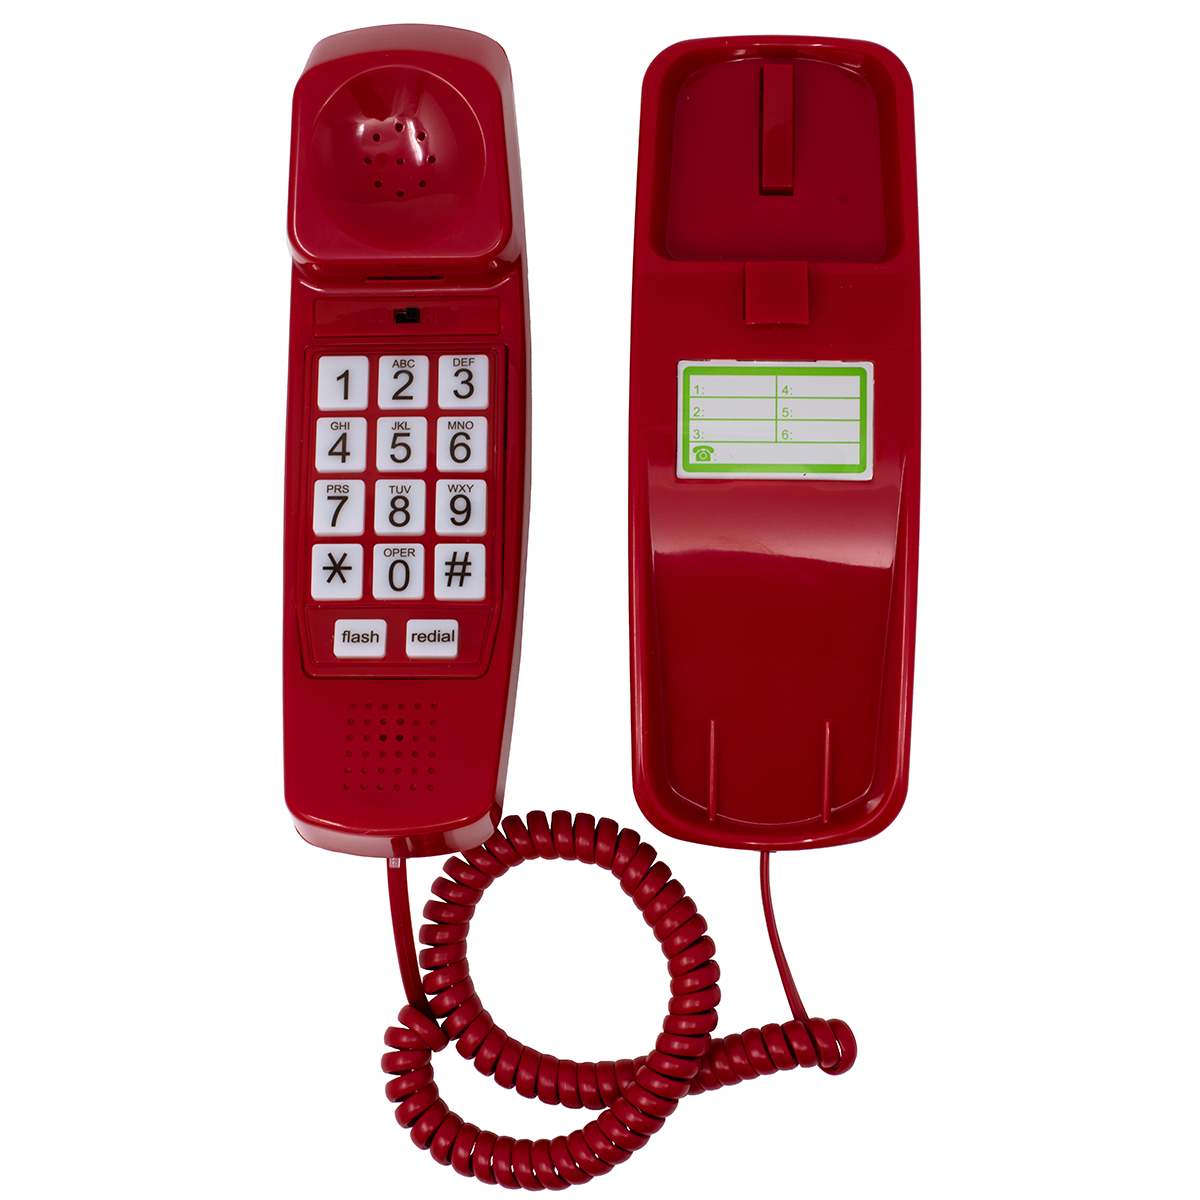 Trimline Red Analog Telephone